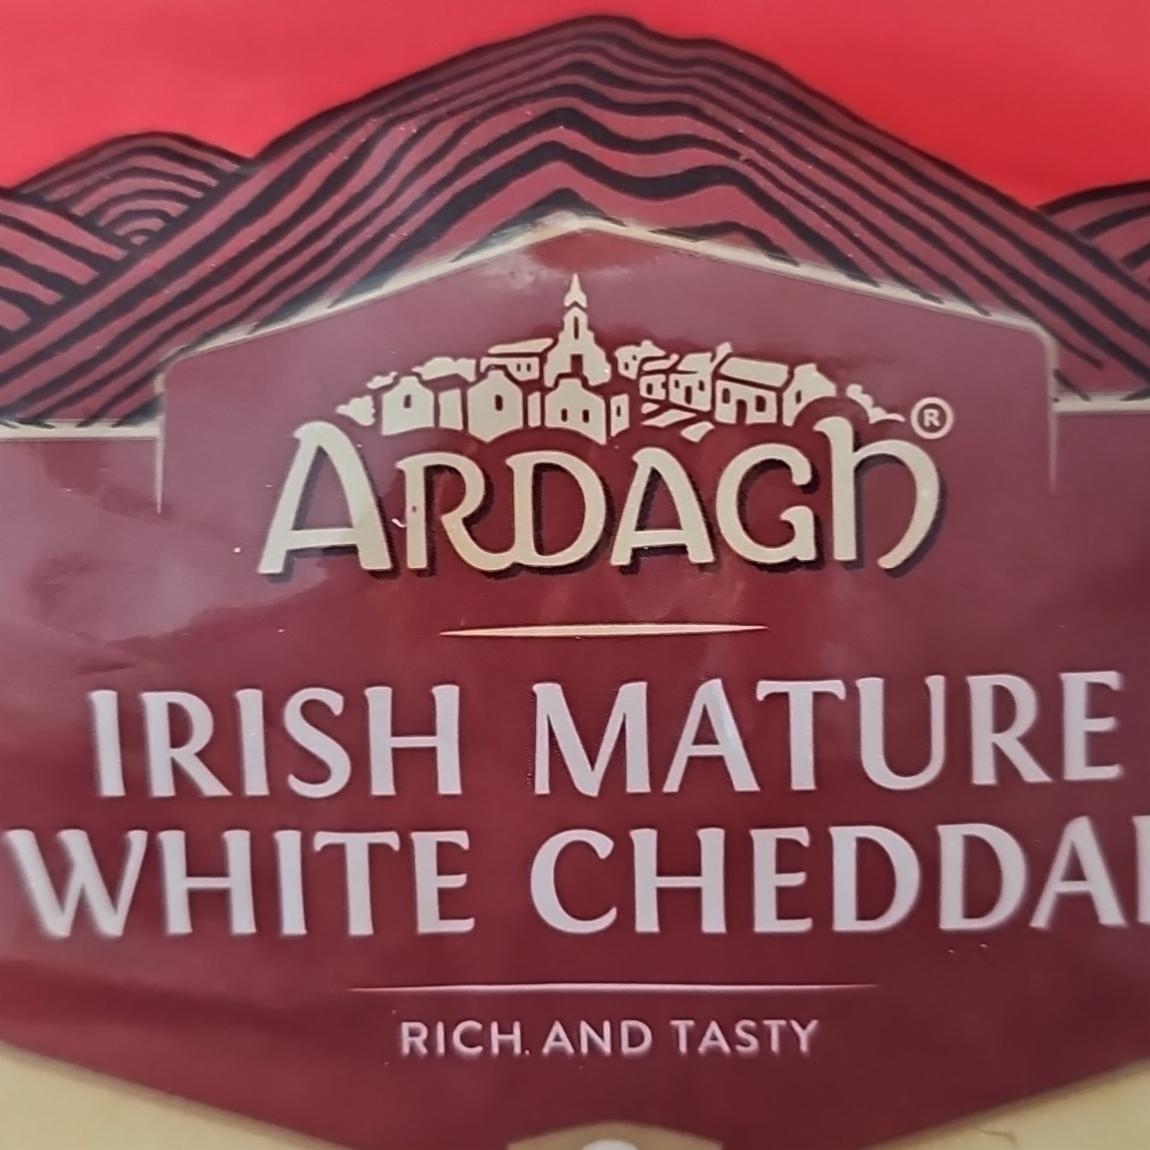 Fotografie - Irish Mature White Cheddar Ardagh